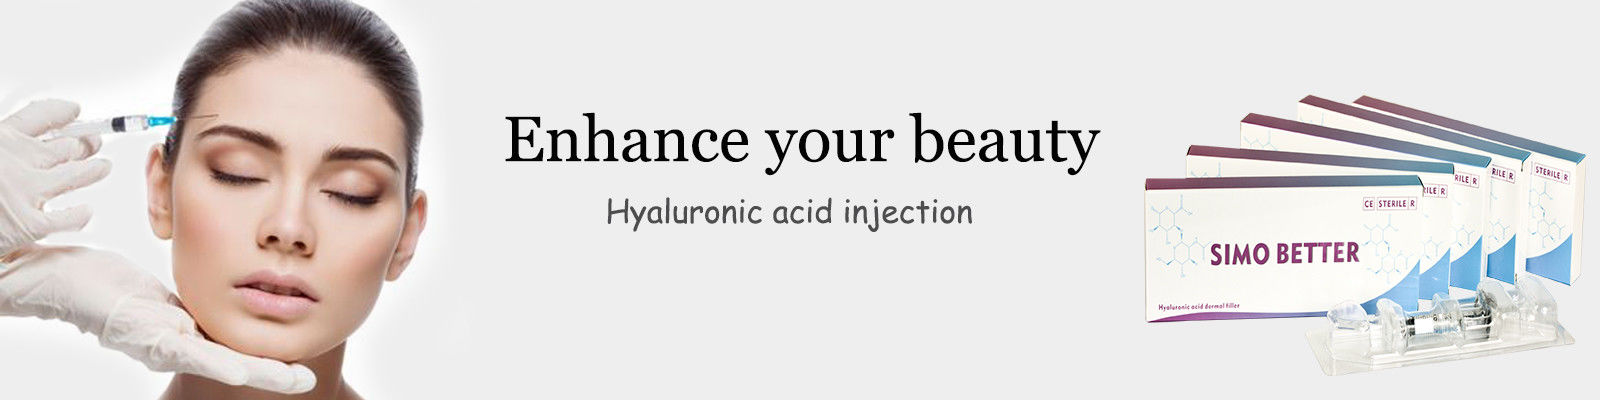 Injection d'acide hyaluronique